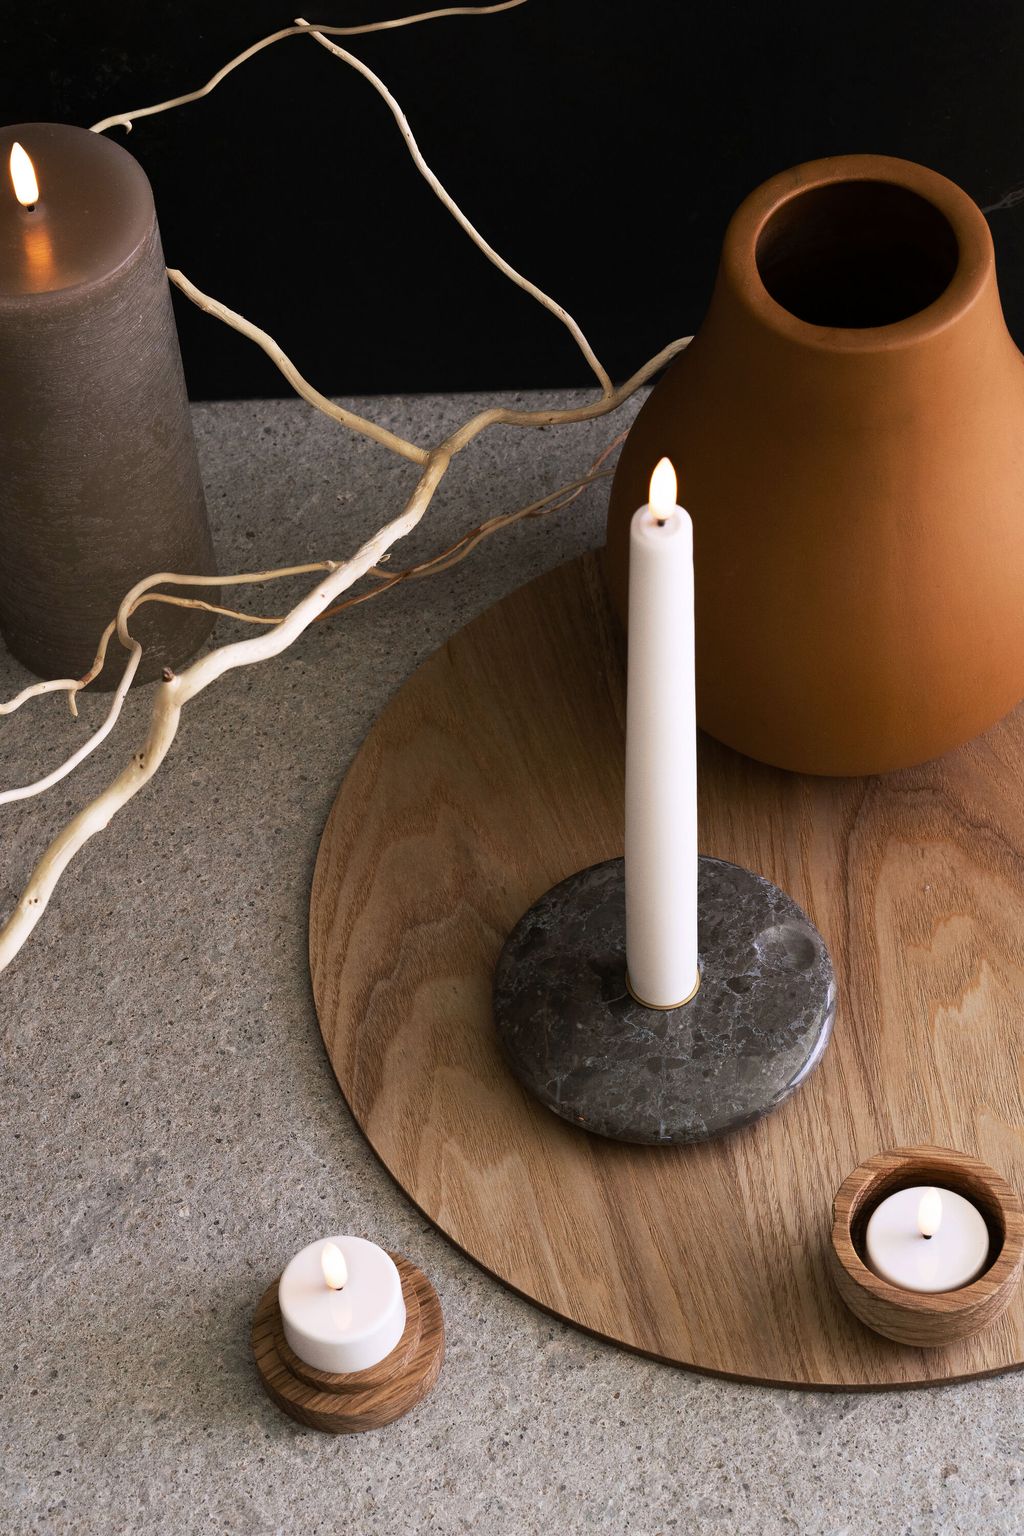 Uyuni Lighting Led Pillar Candle 3 D Flame øx H 7,8x20,3 Cm, Sandstone